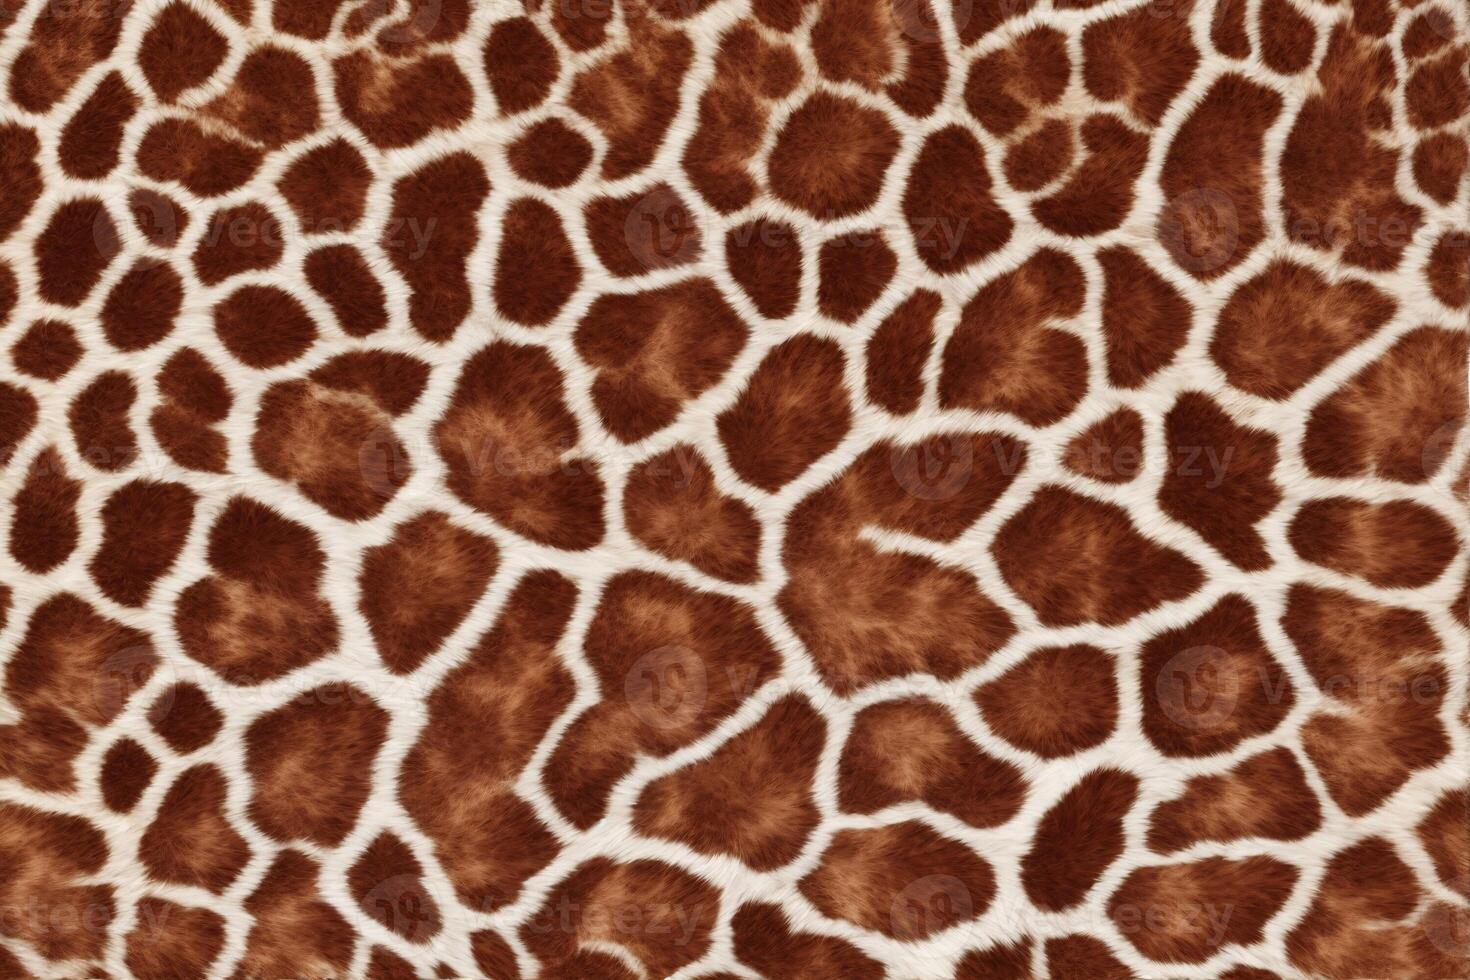 Giraffe Haut Pelz Textur, Giraffe Pelz Hintergrund, flauschige Giraffe Haut Pelz Textur, Giraffe Haut Pelz Muster, Tier Haut Pelz Textur, Giraffe drucken, foto